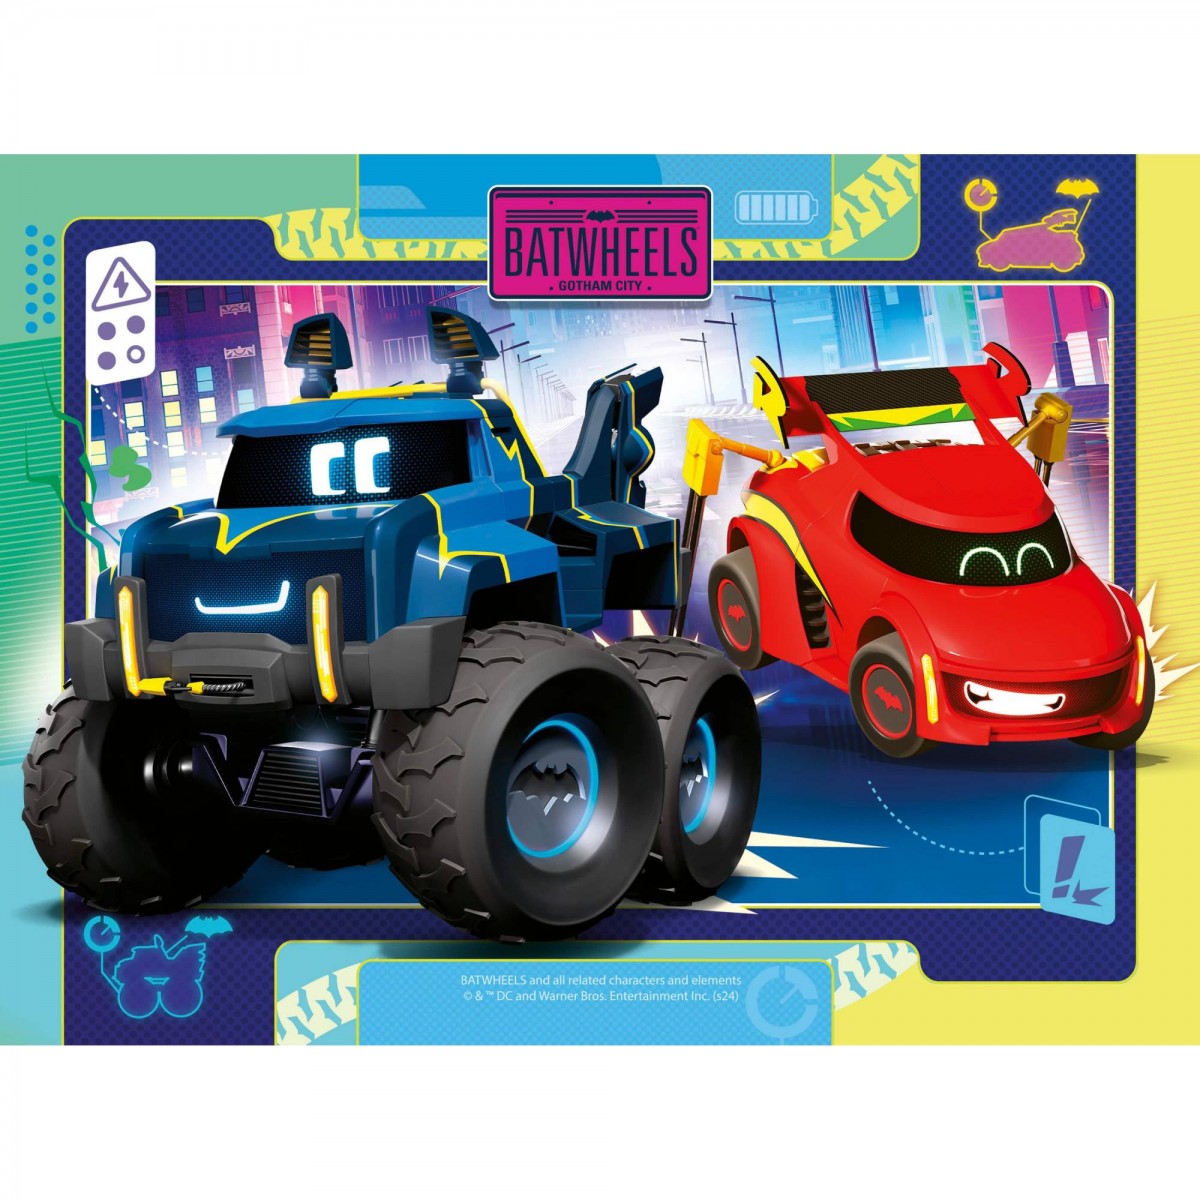 ❄️ Big Freeze in Little Gotham City! ❄️, Batwheels Toy Adventures